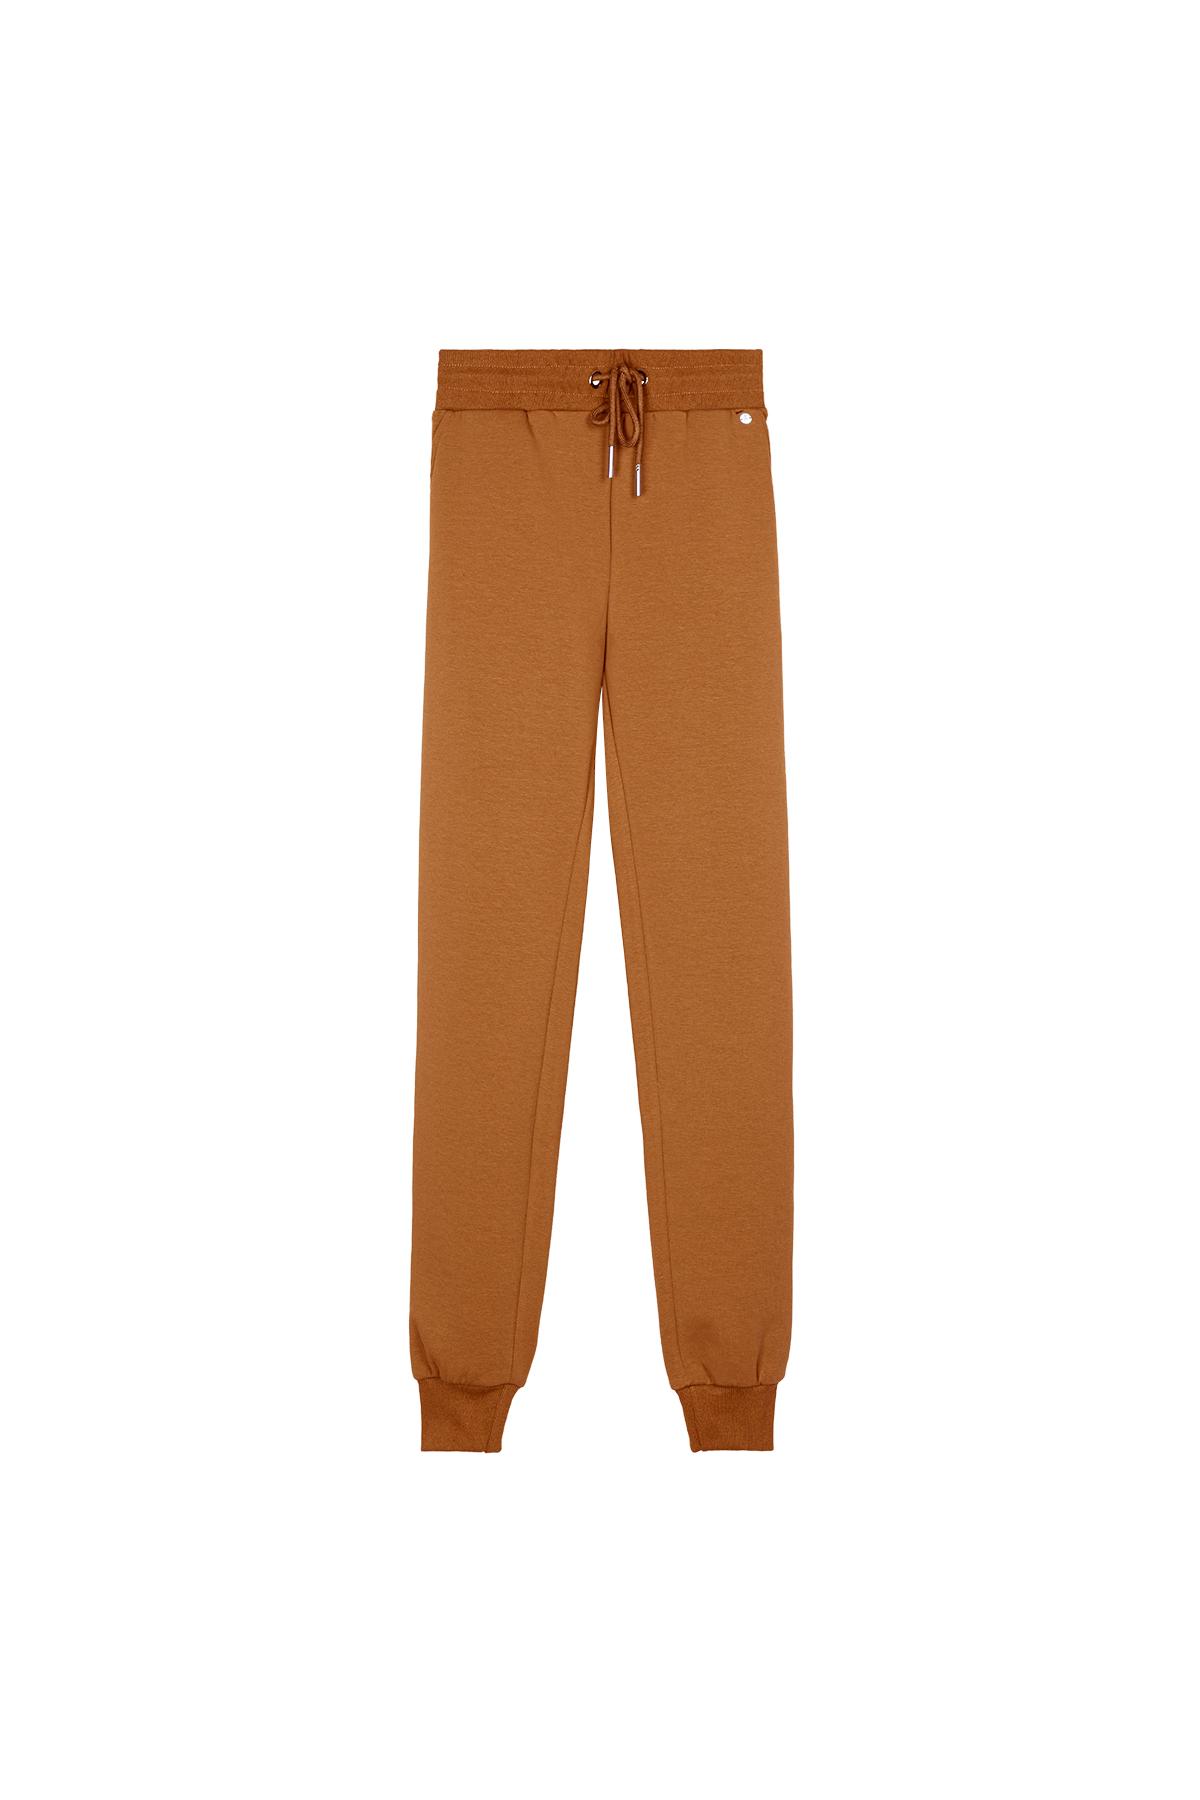 Komik pantolonlar Orange XL 